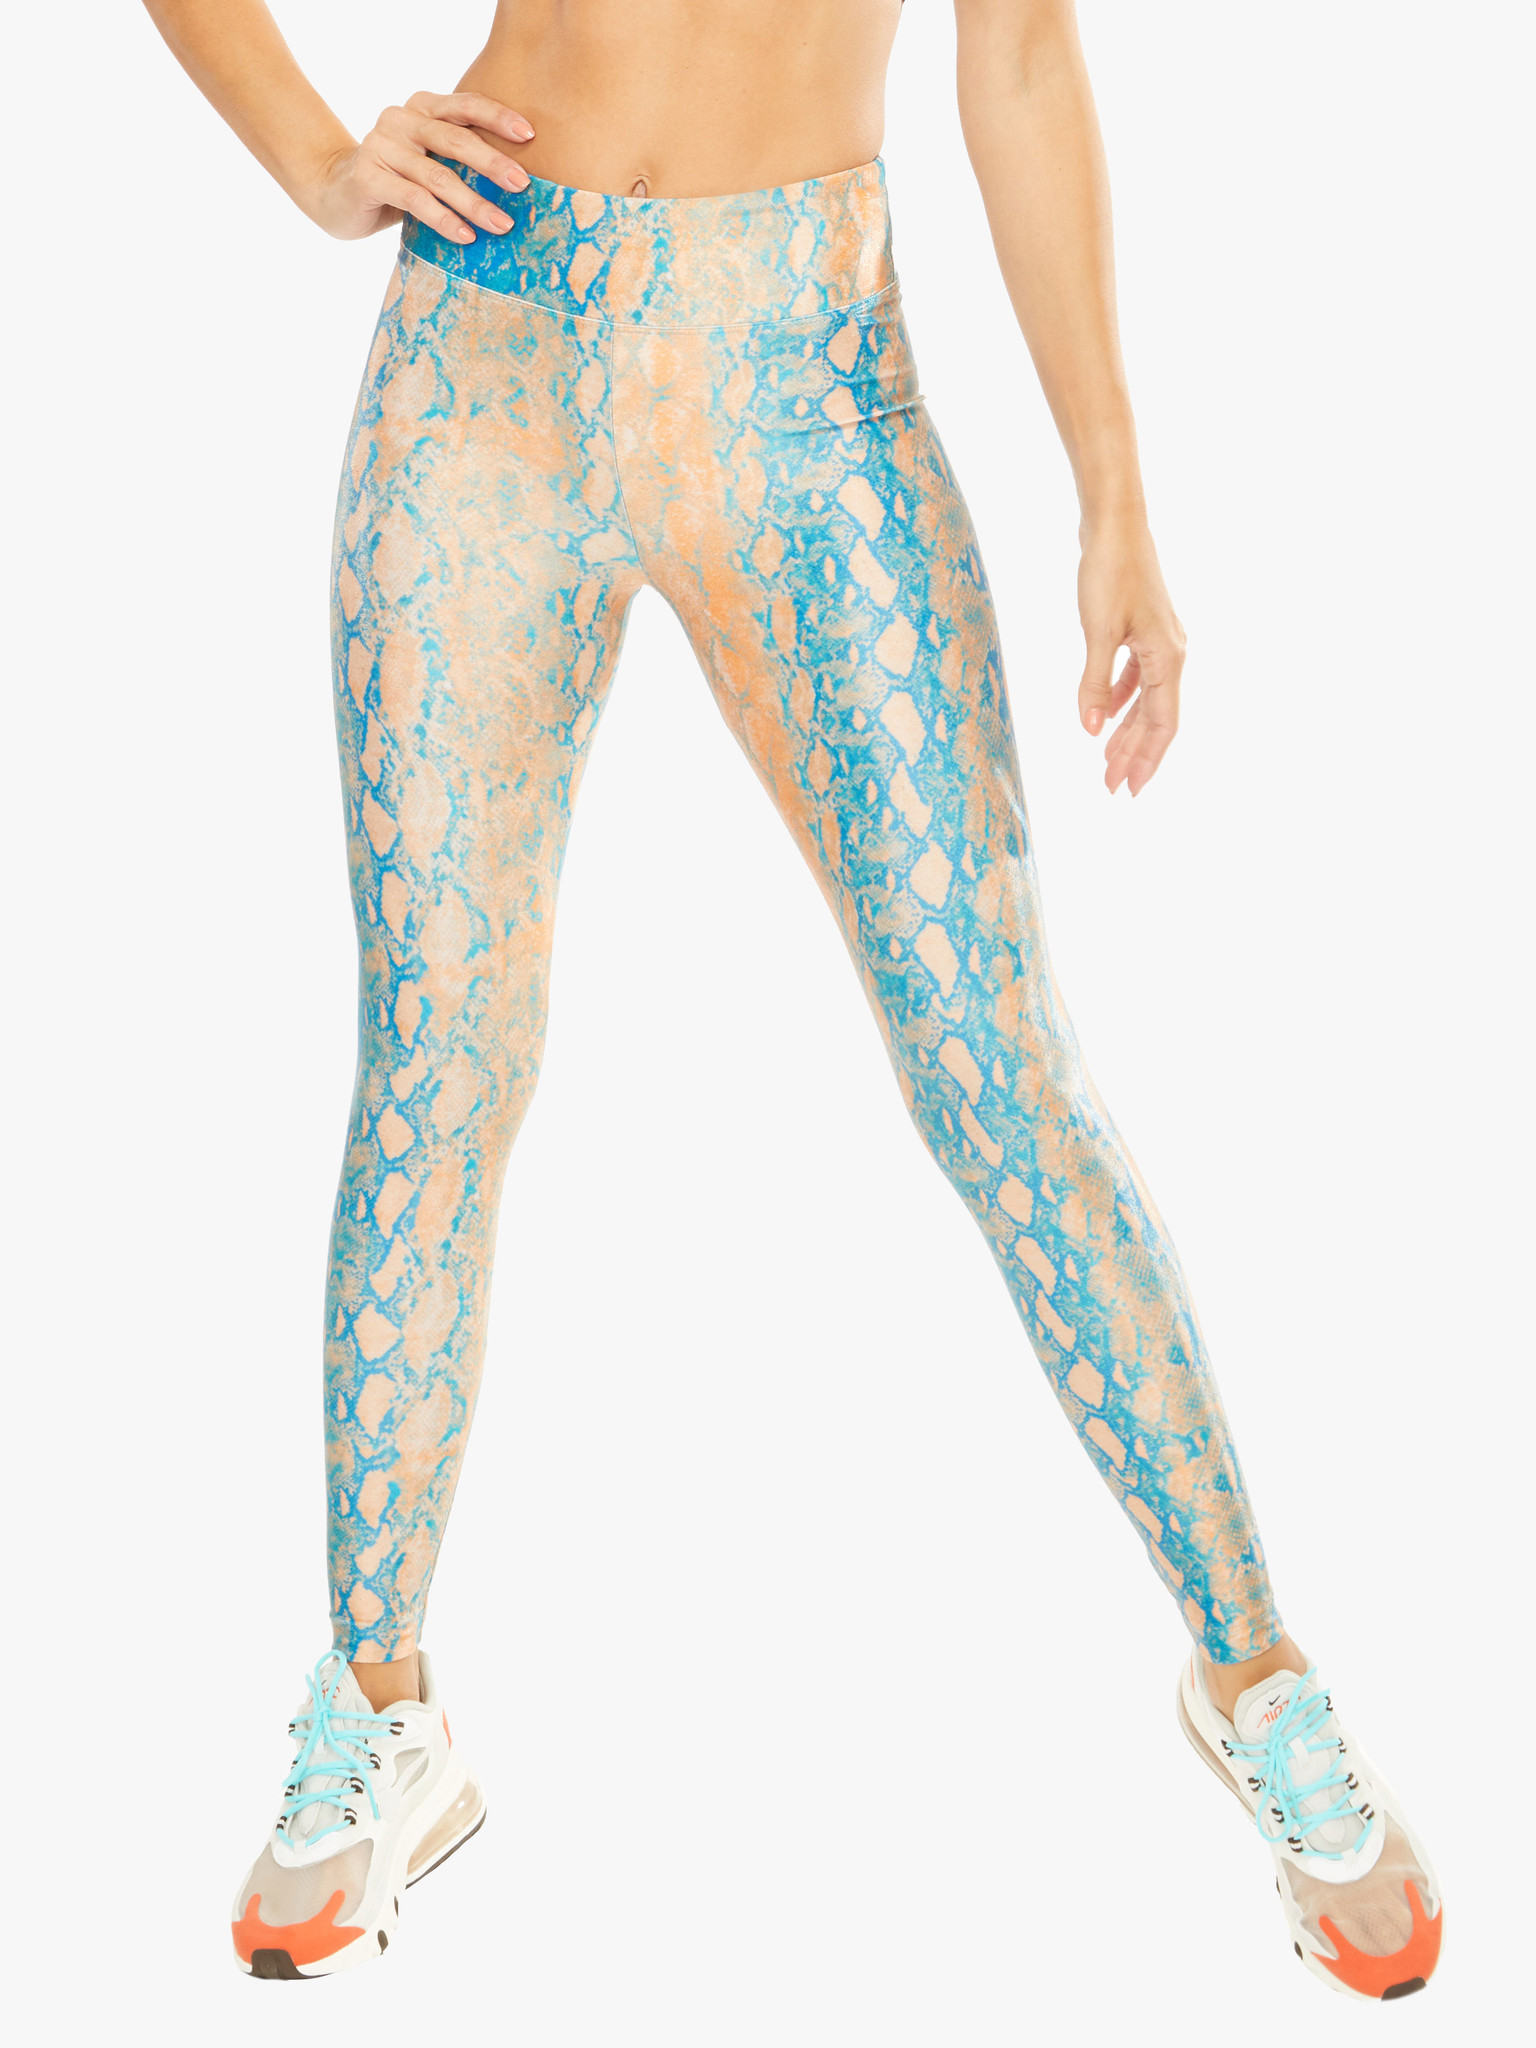 Koral Activewear Lustrous High Rise Legging - Rosewood  Koral activewear,  High rise leggings, Sparkle leggings